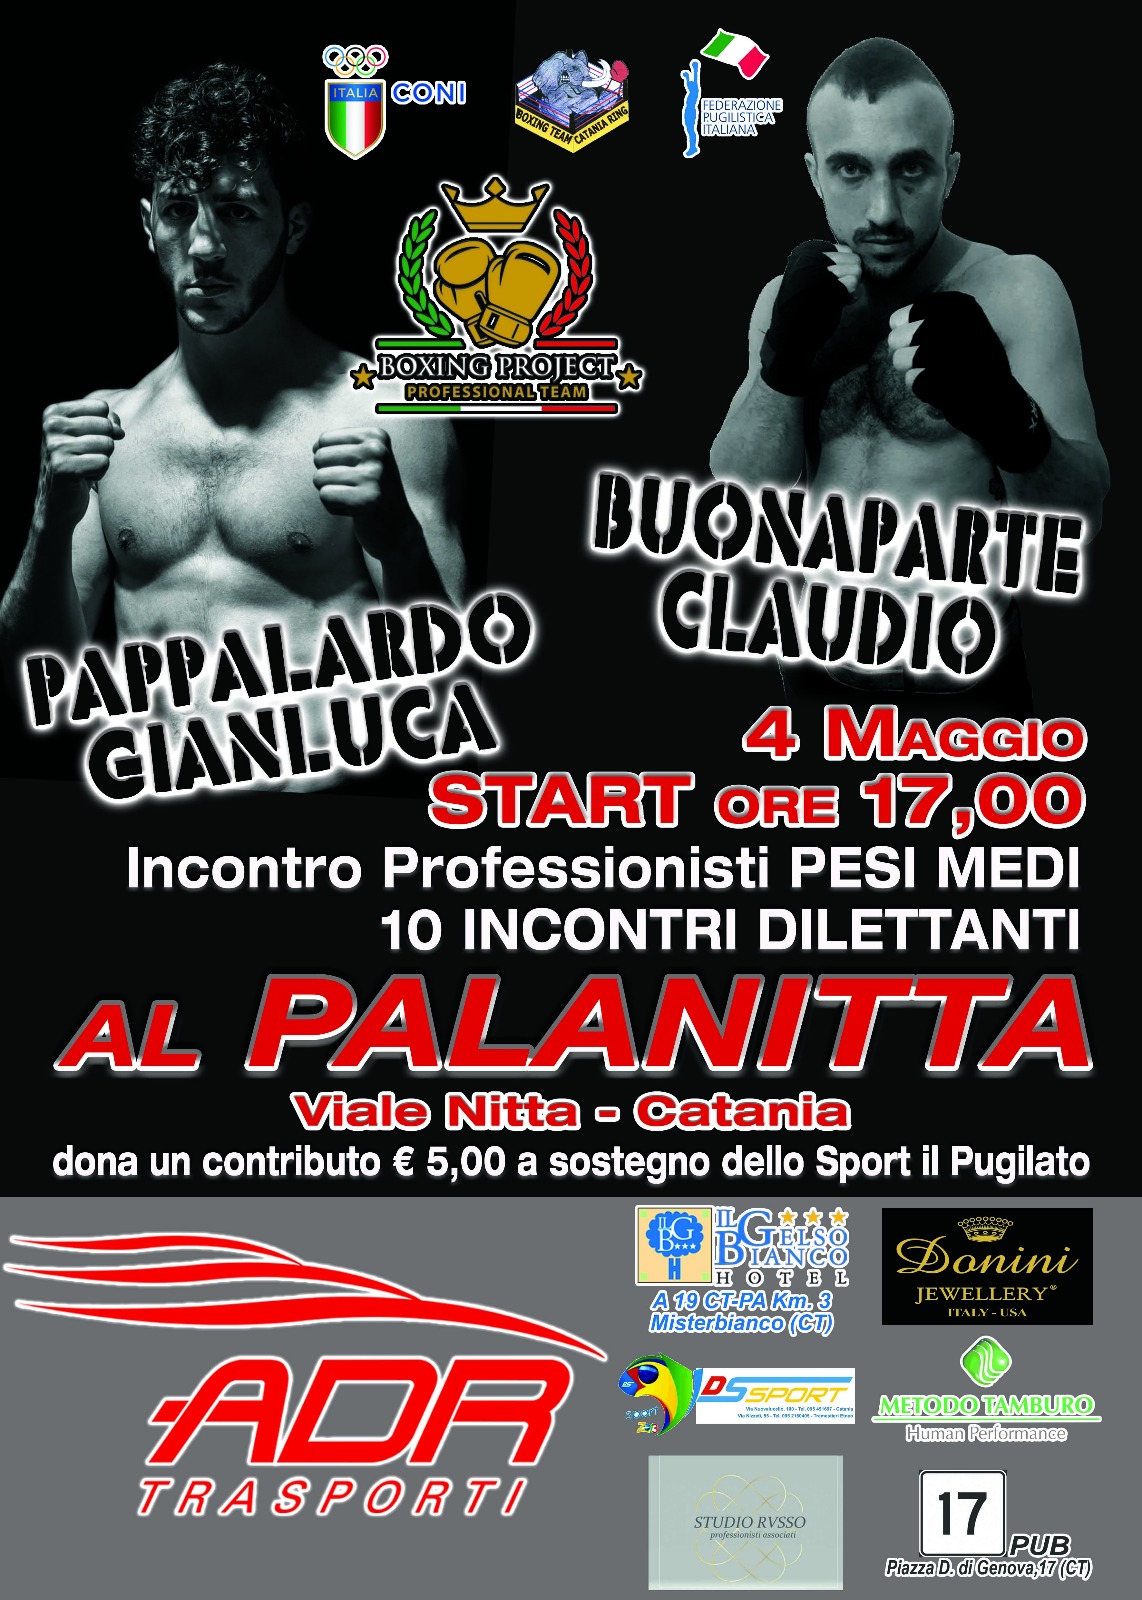 Pappalardo-Buonaparte: boxe doc al “Palanitta”